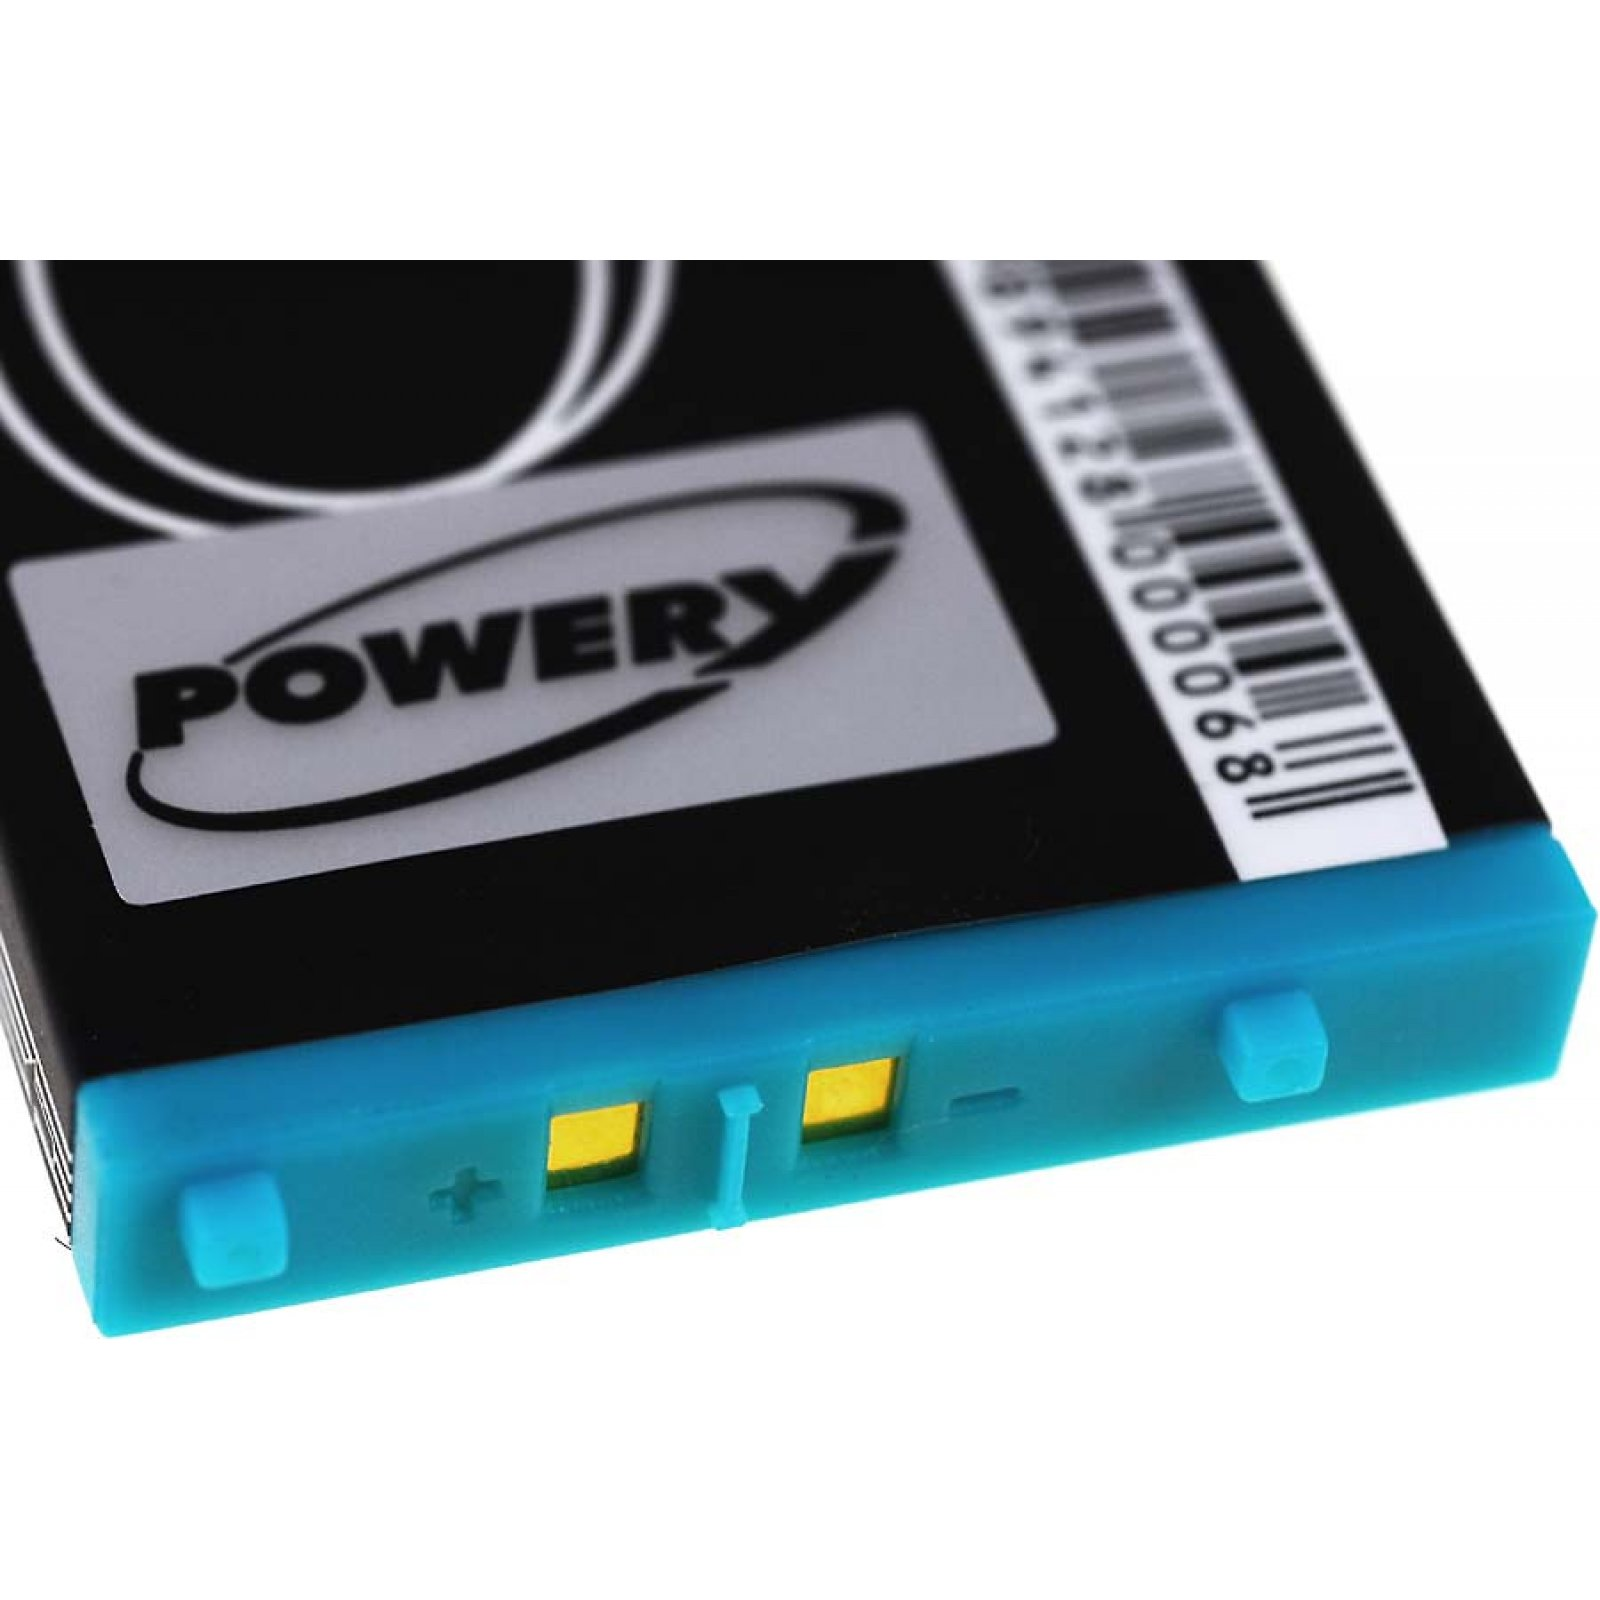 Akku Advance 3.7 SP GameBoy Volt, Nintendo Li-Ion POWERY Akku, 900mAh iPod-MP3-DAB-Game für